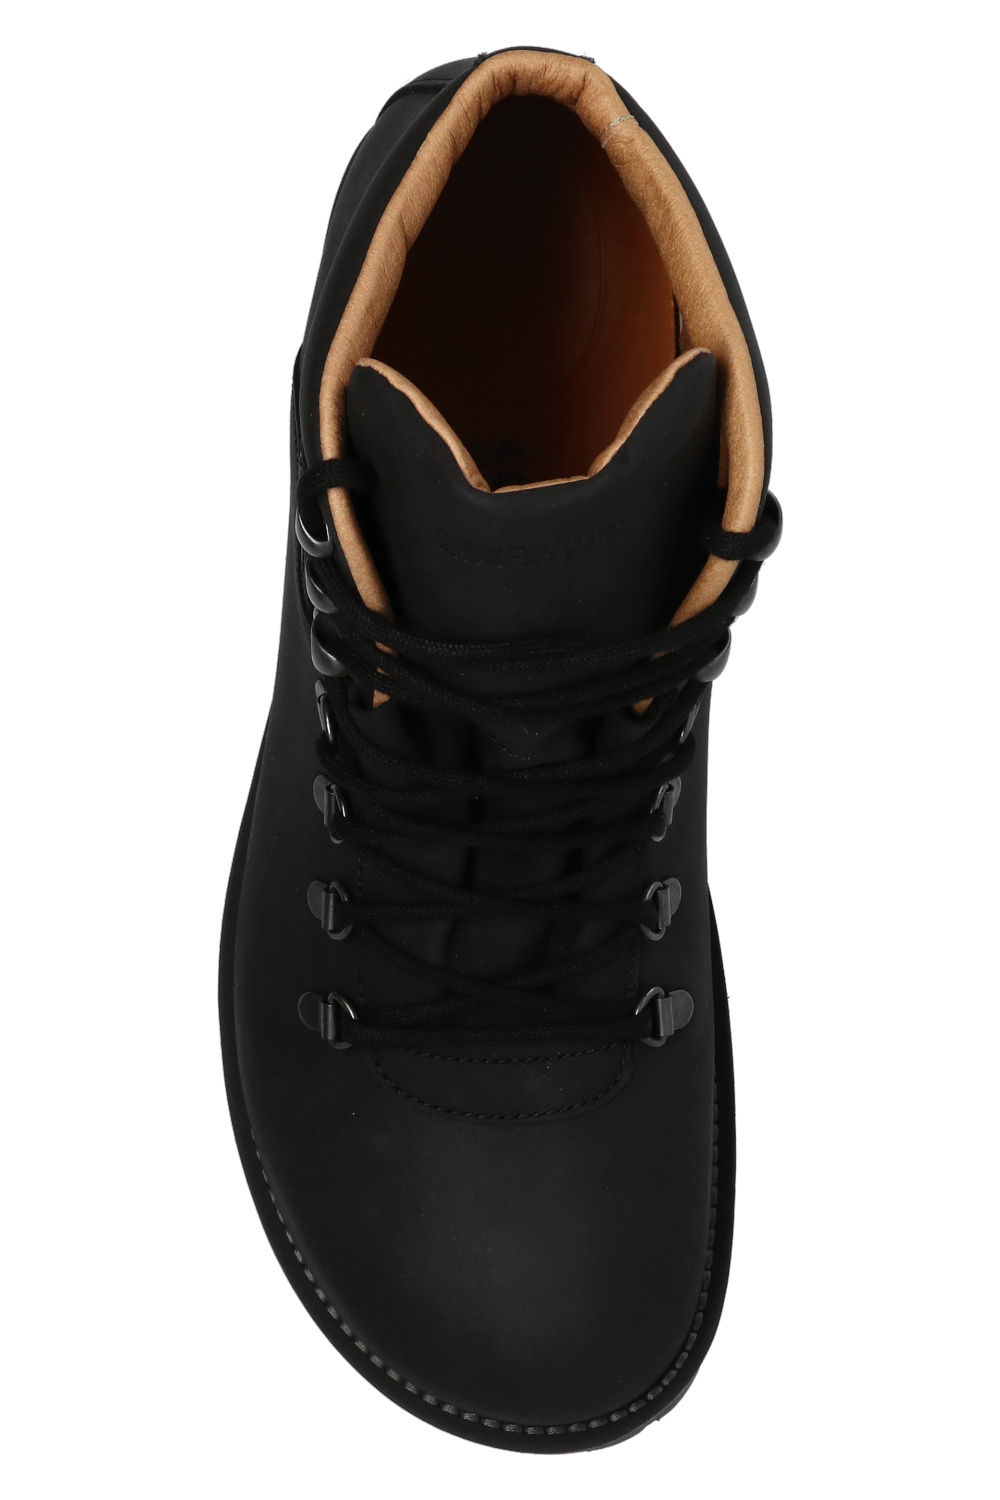 Birkenstock ‘Jackson’ leather boots